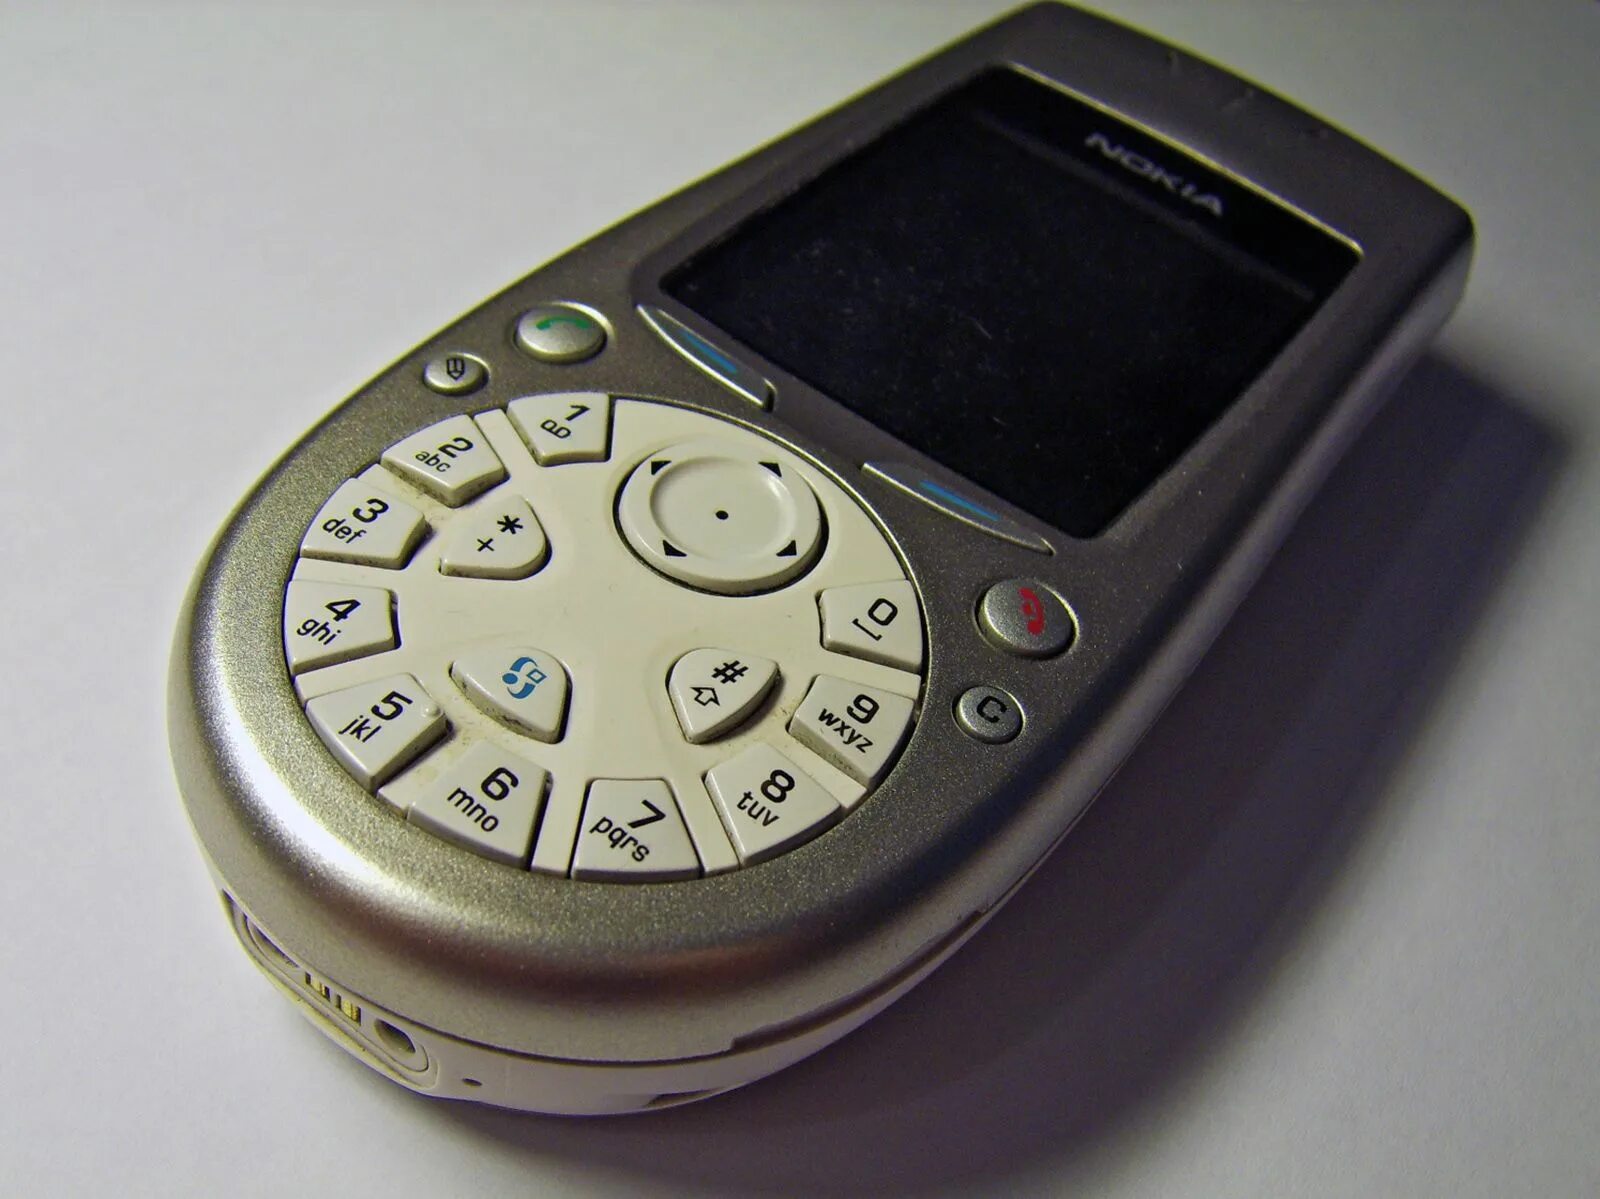 Nokia 3650. Смартфон Nokia 3650. Нокиа с камерой 3650. Смартфон Nokia 7650.